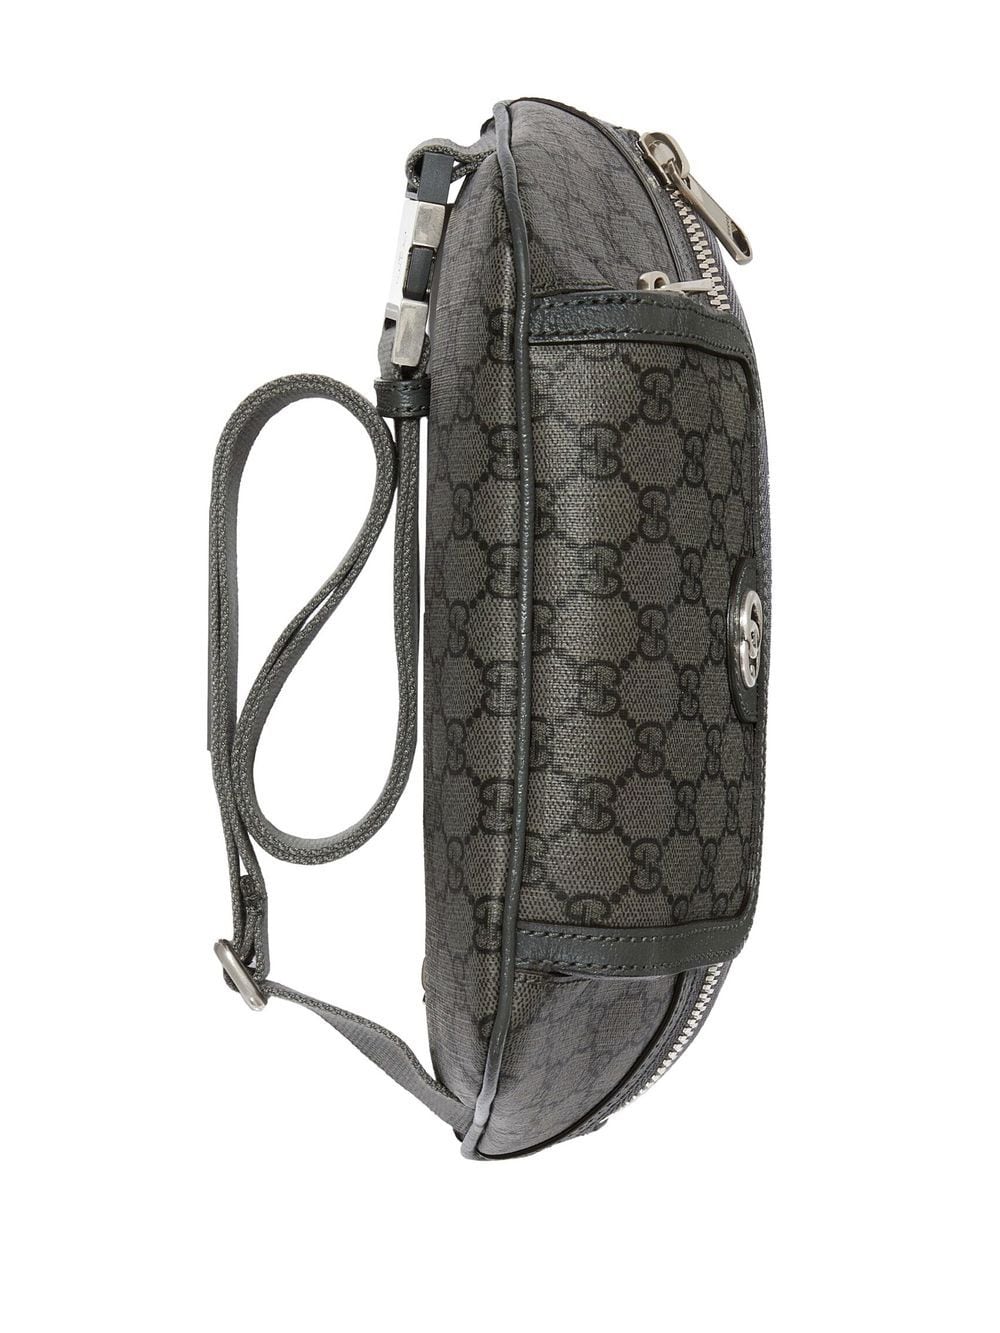 Gucci Ophidia GG Logo Monogram Leather Fanny Pack Belt Bag – Mint Market